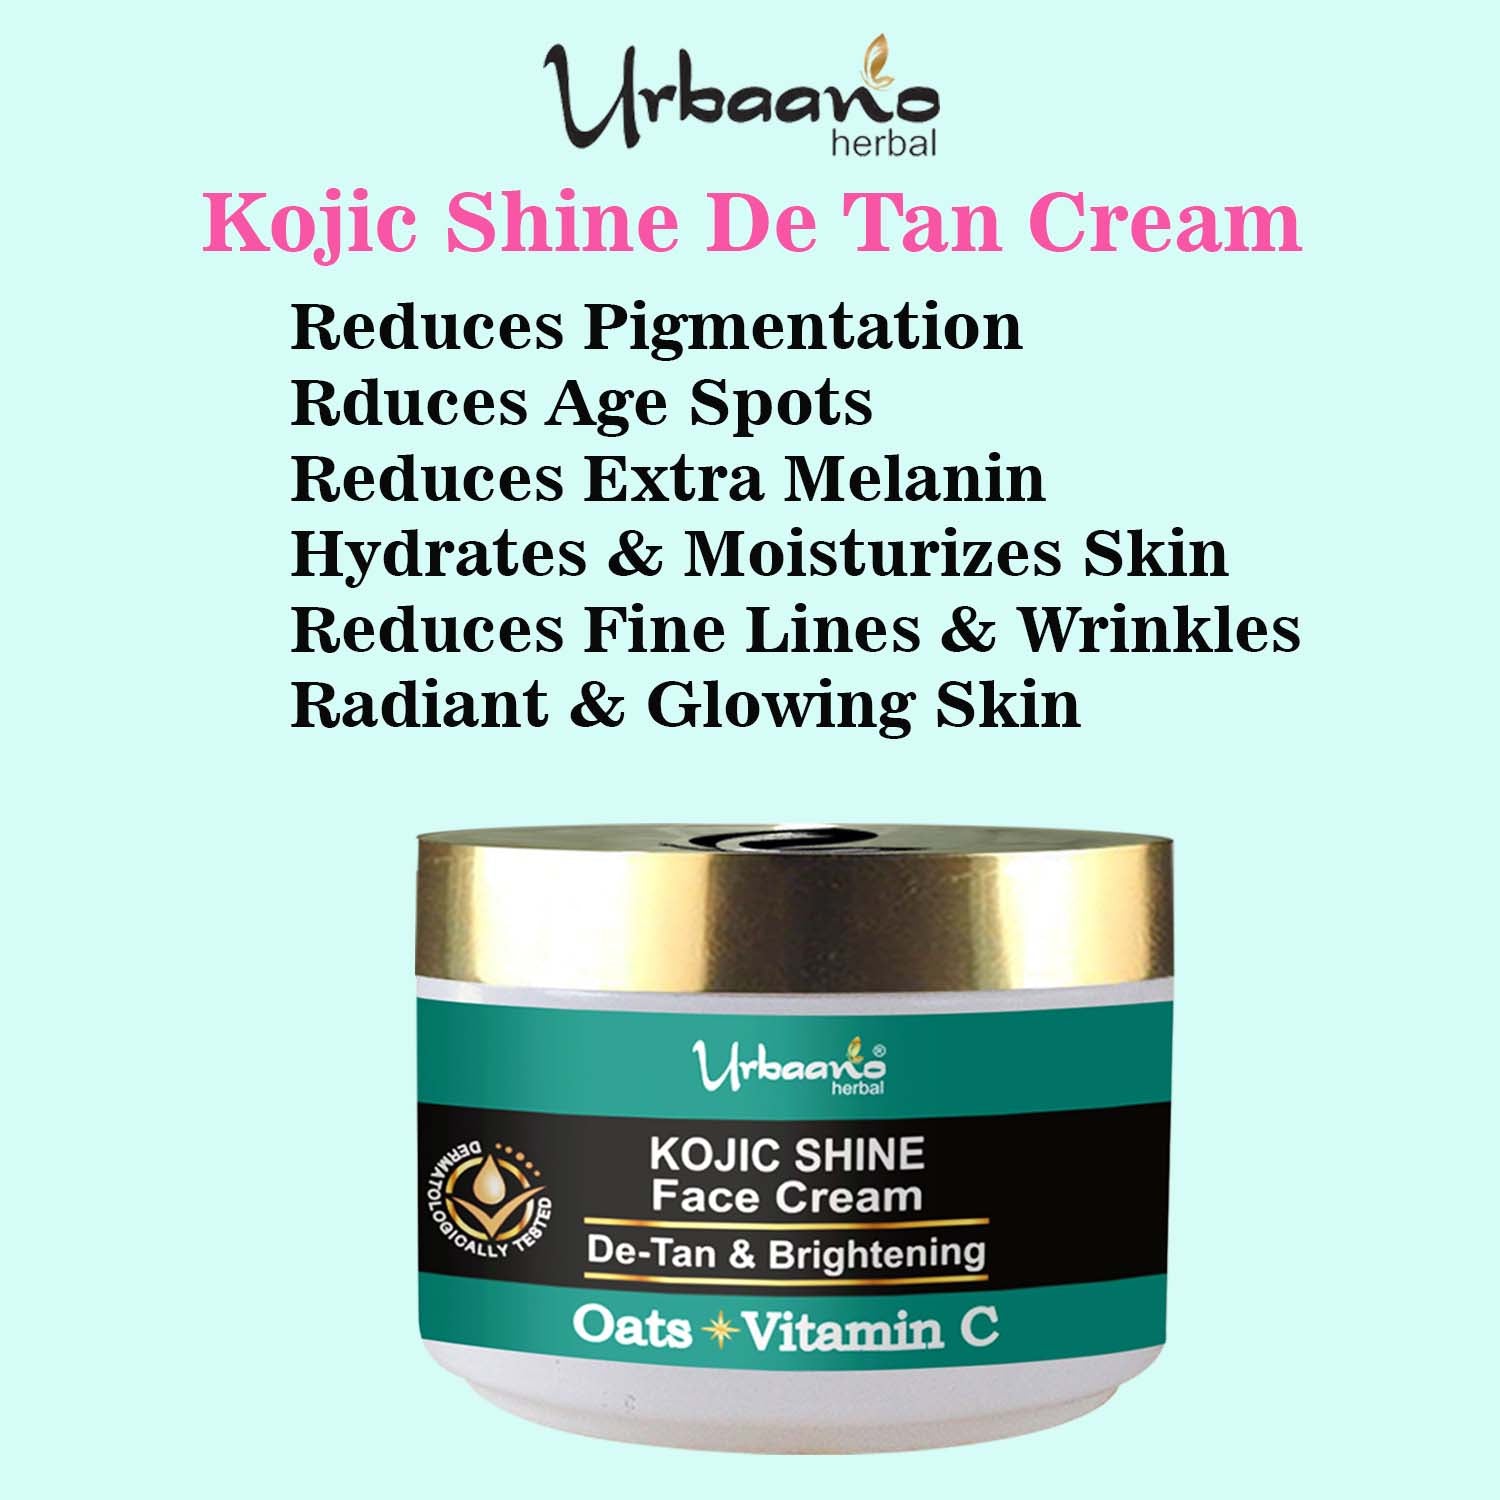 urbaano herbal de tan facial kit for bright spotless, radiance glow kojic shine face cream